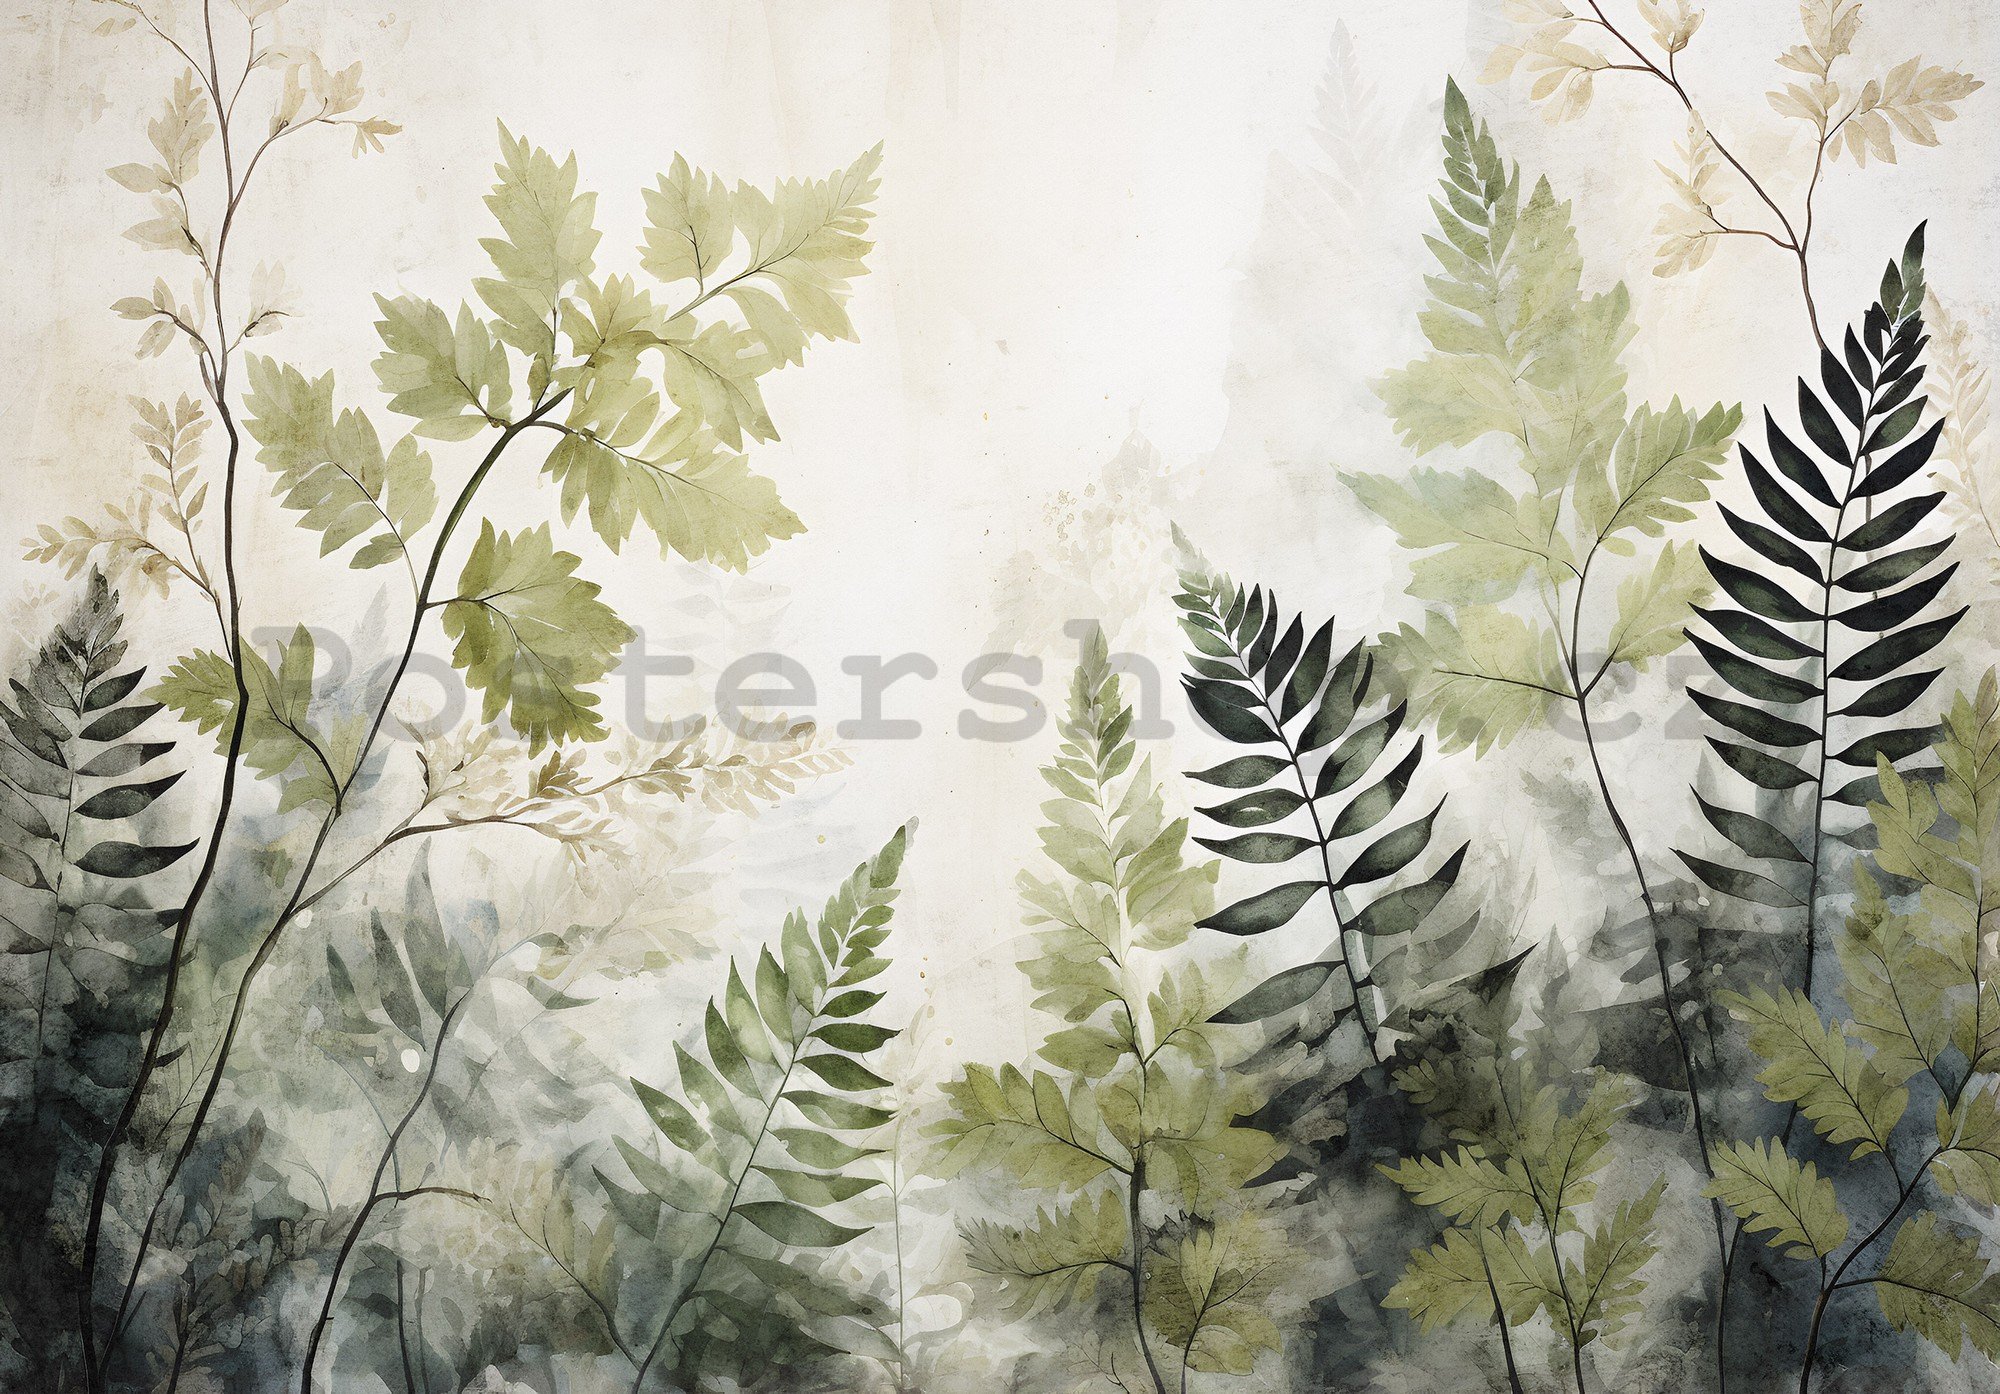 Fototapety vliesové: Leaves Green Painted - 368x254 cm